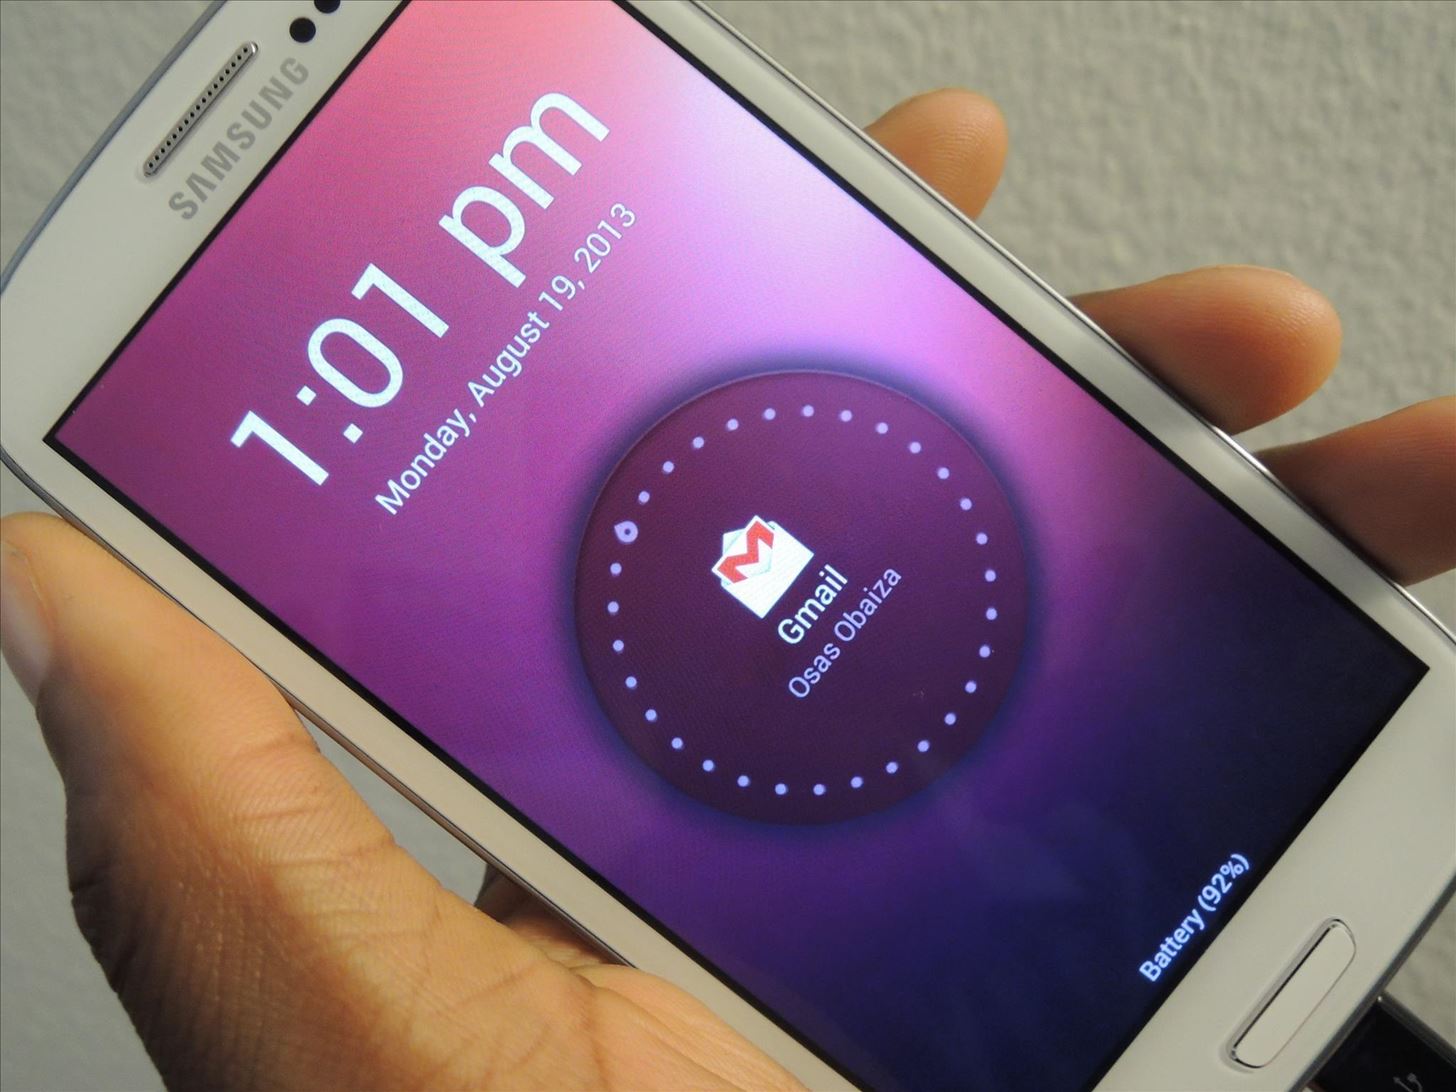 How to Get Sleek Ubuntu-Style Lock Screen Notifications on Your Samsung Galaxy S3